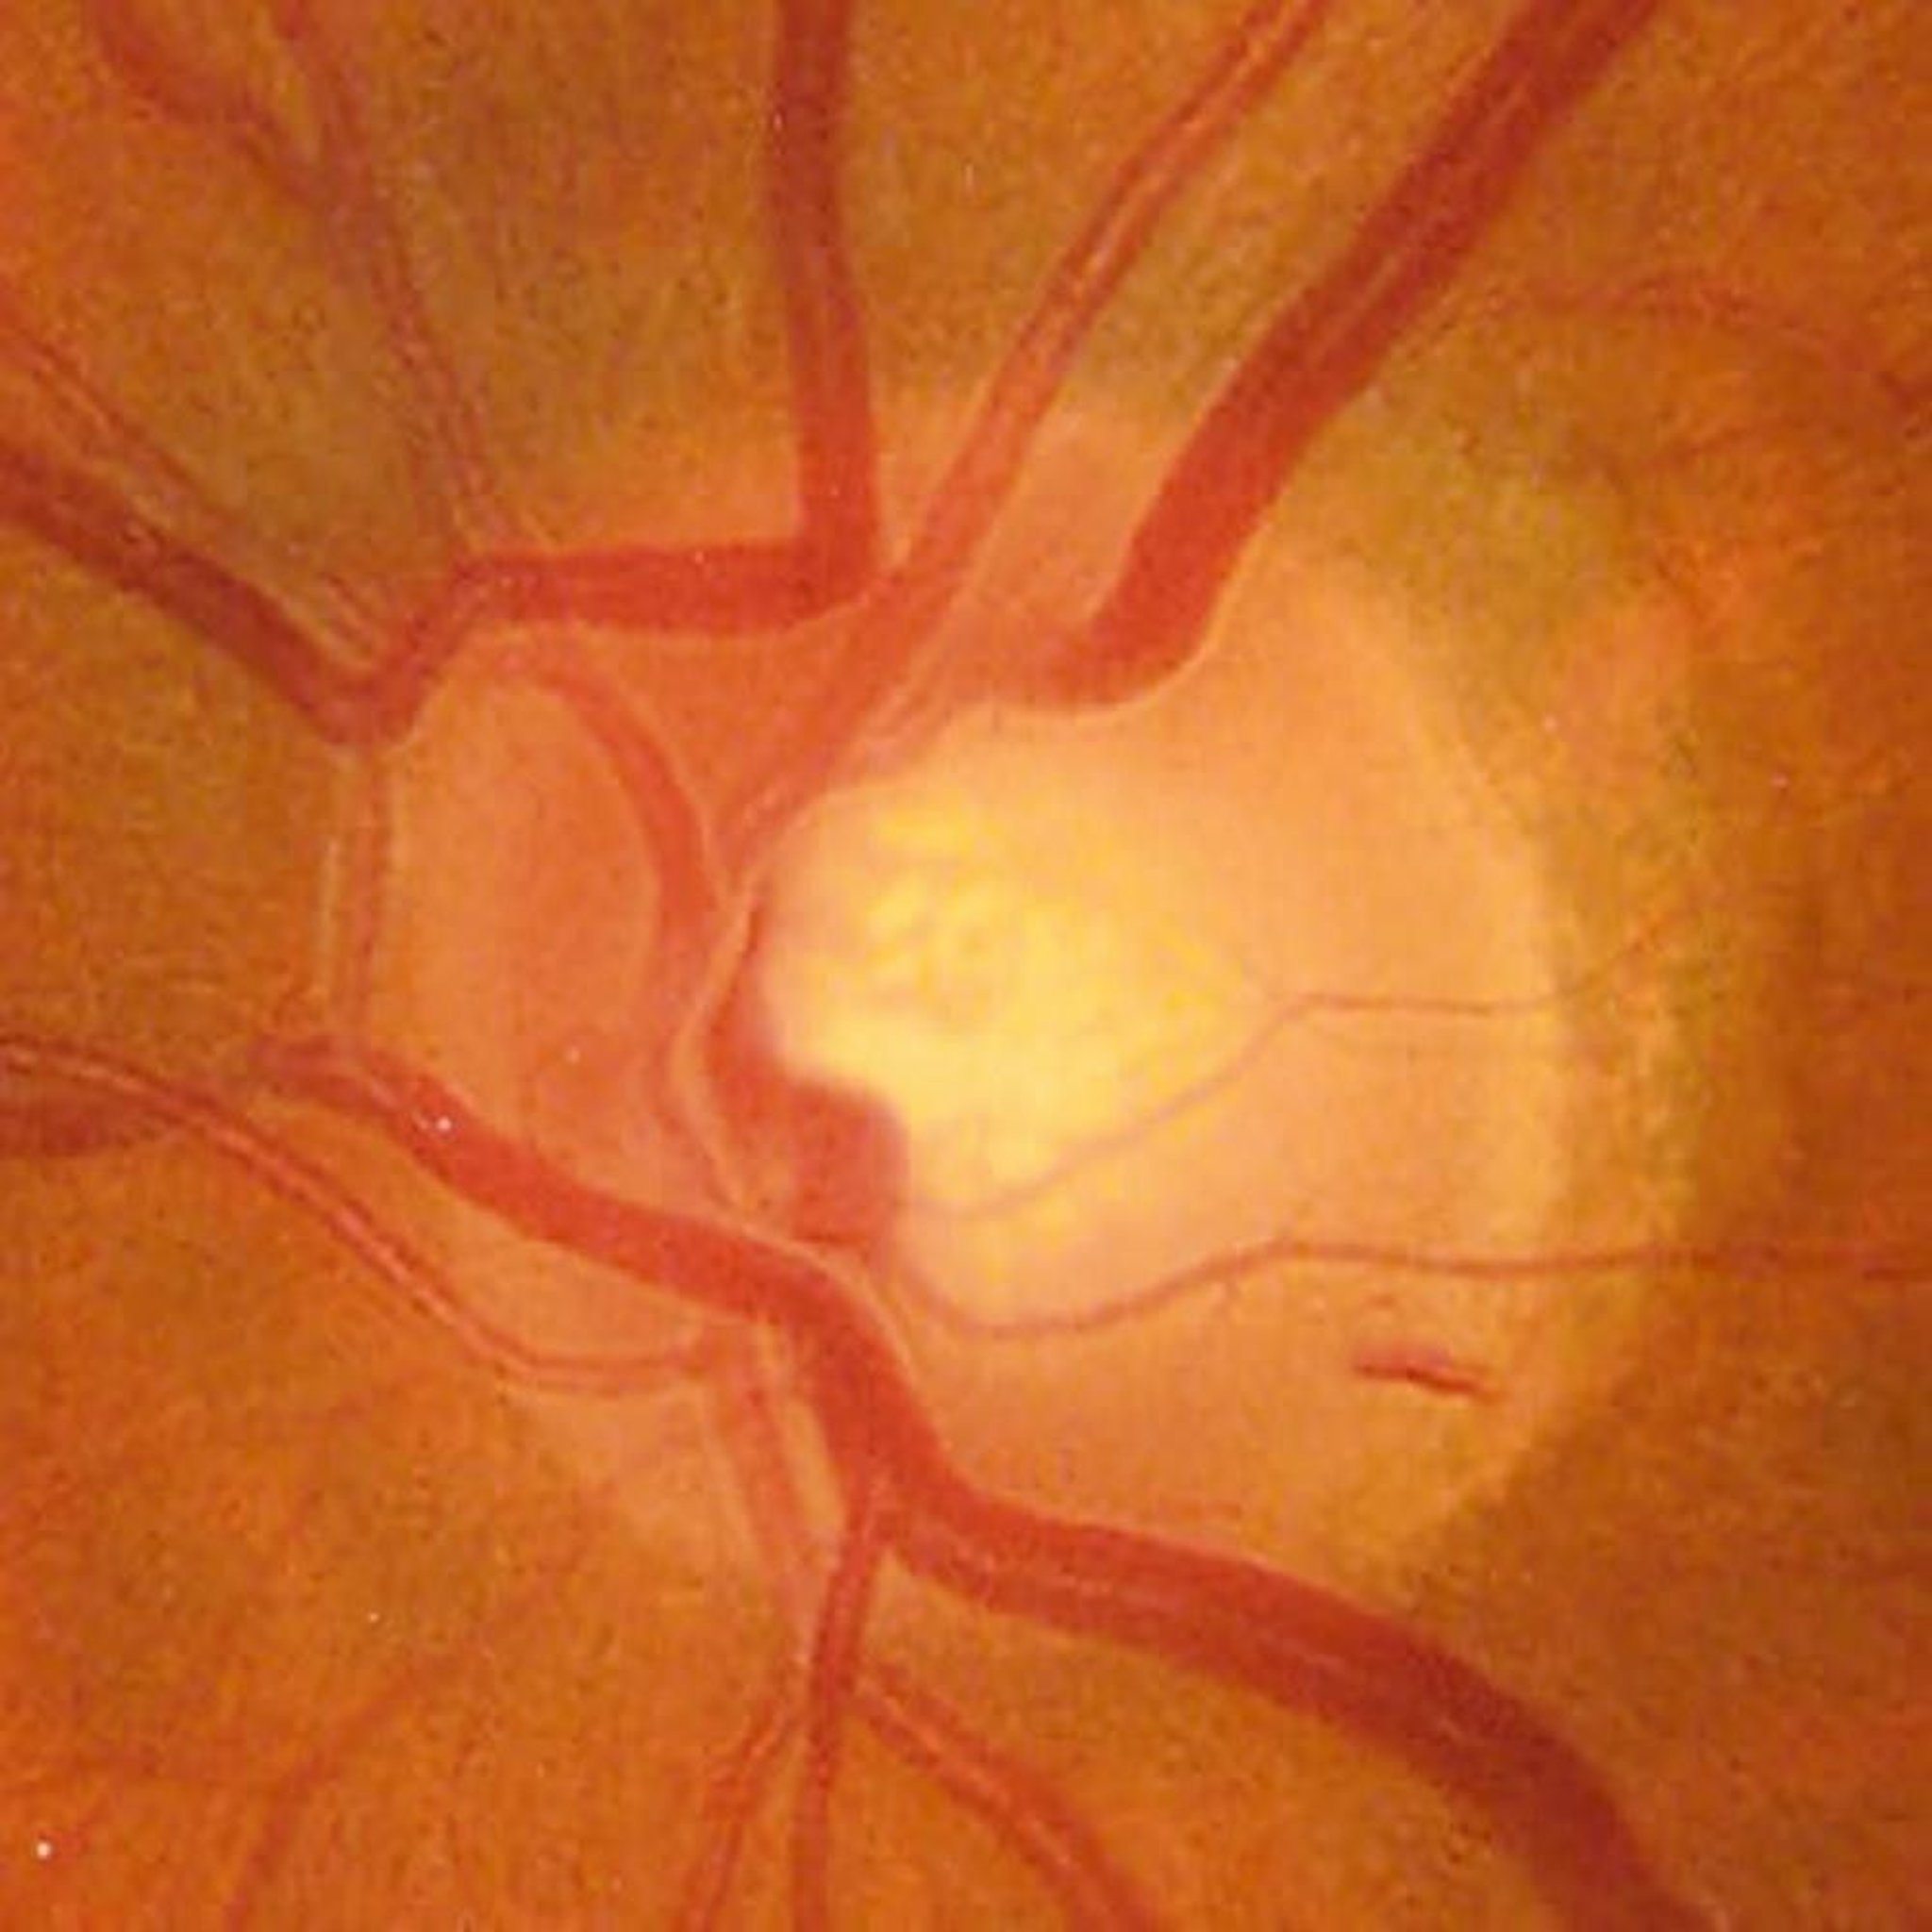 Glaucoma (Optic Disk Hemorrhage)